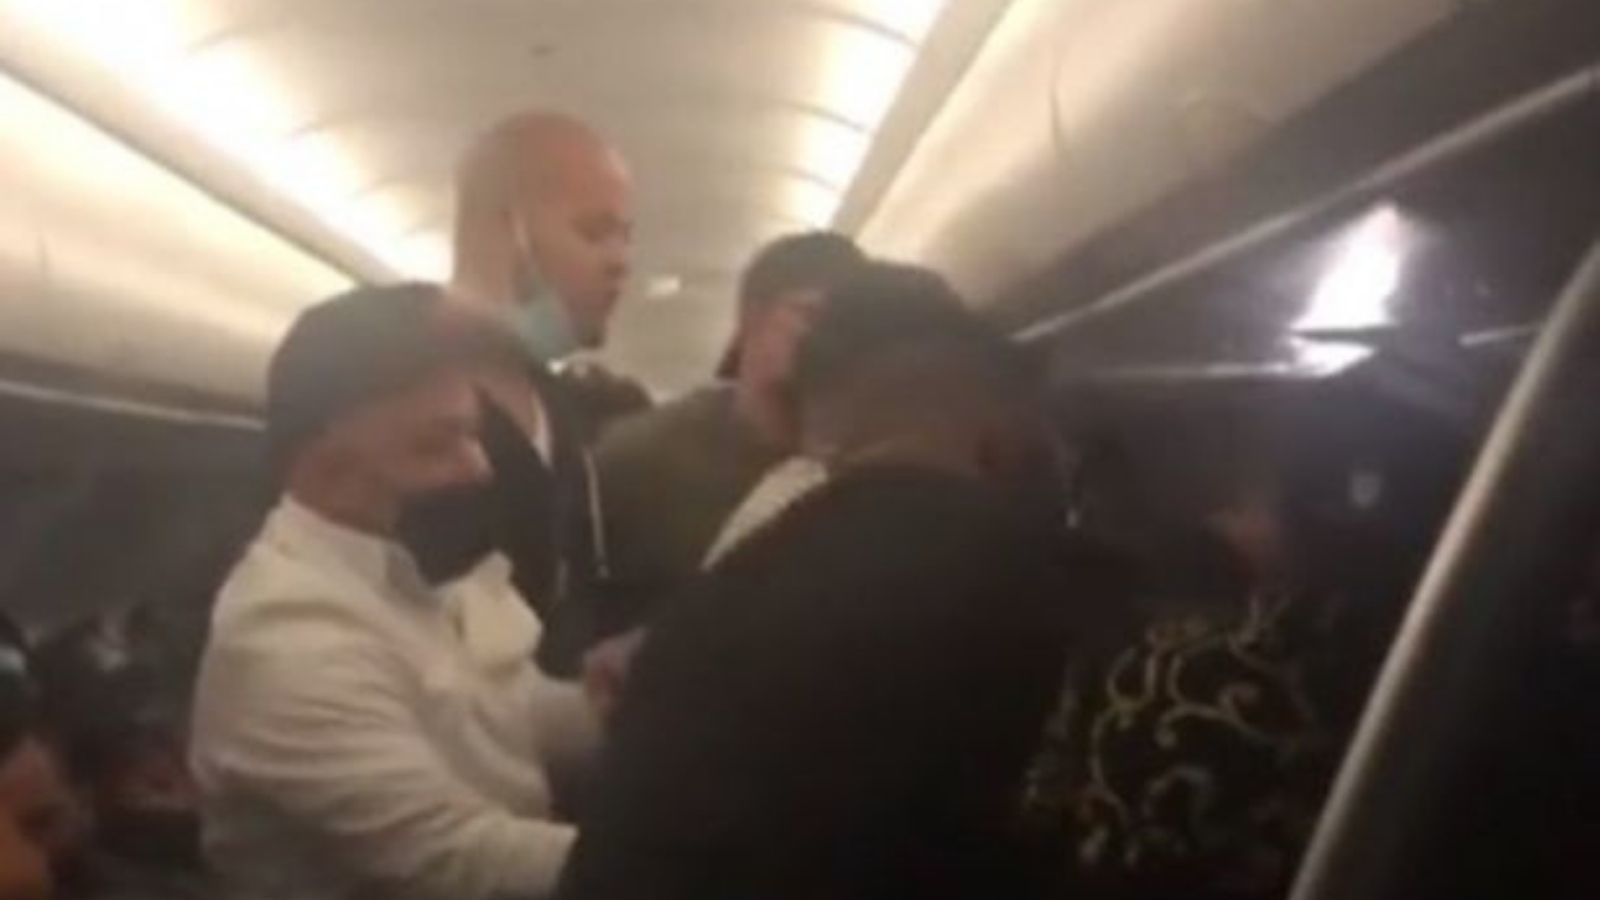 man threatens passengers on flight